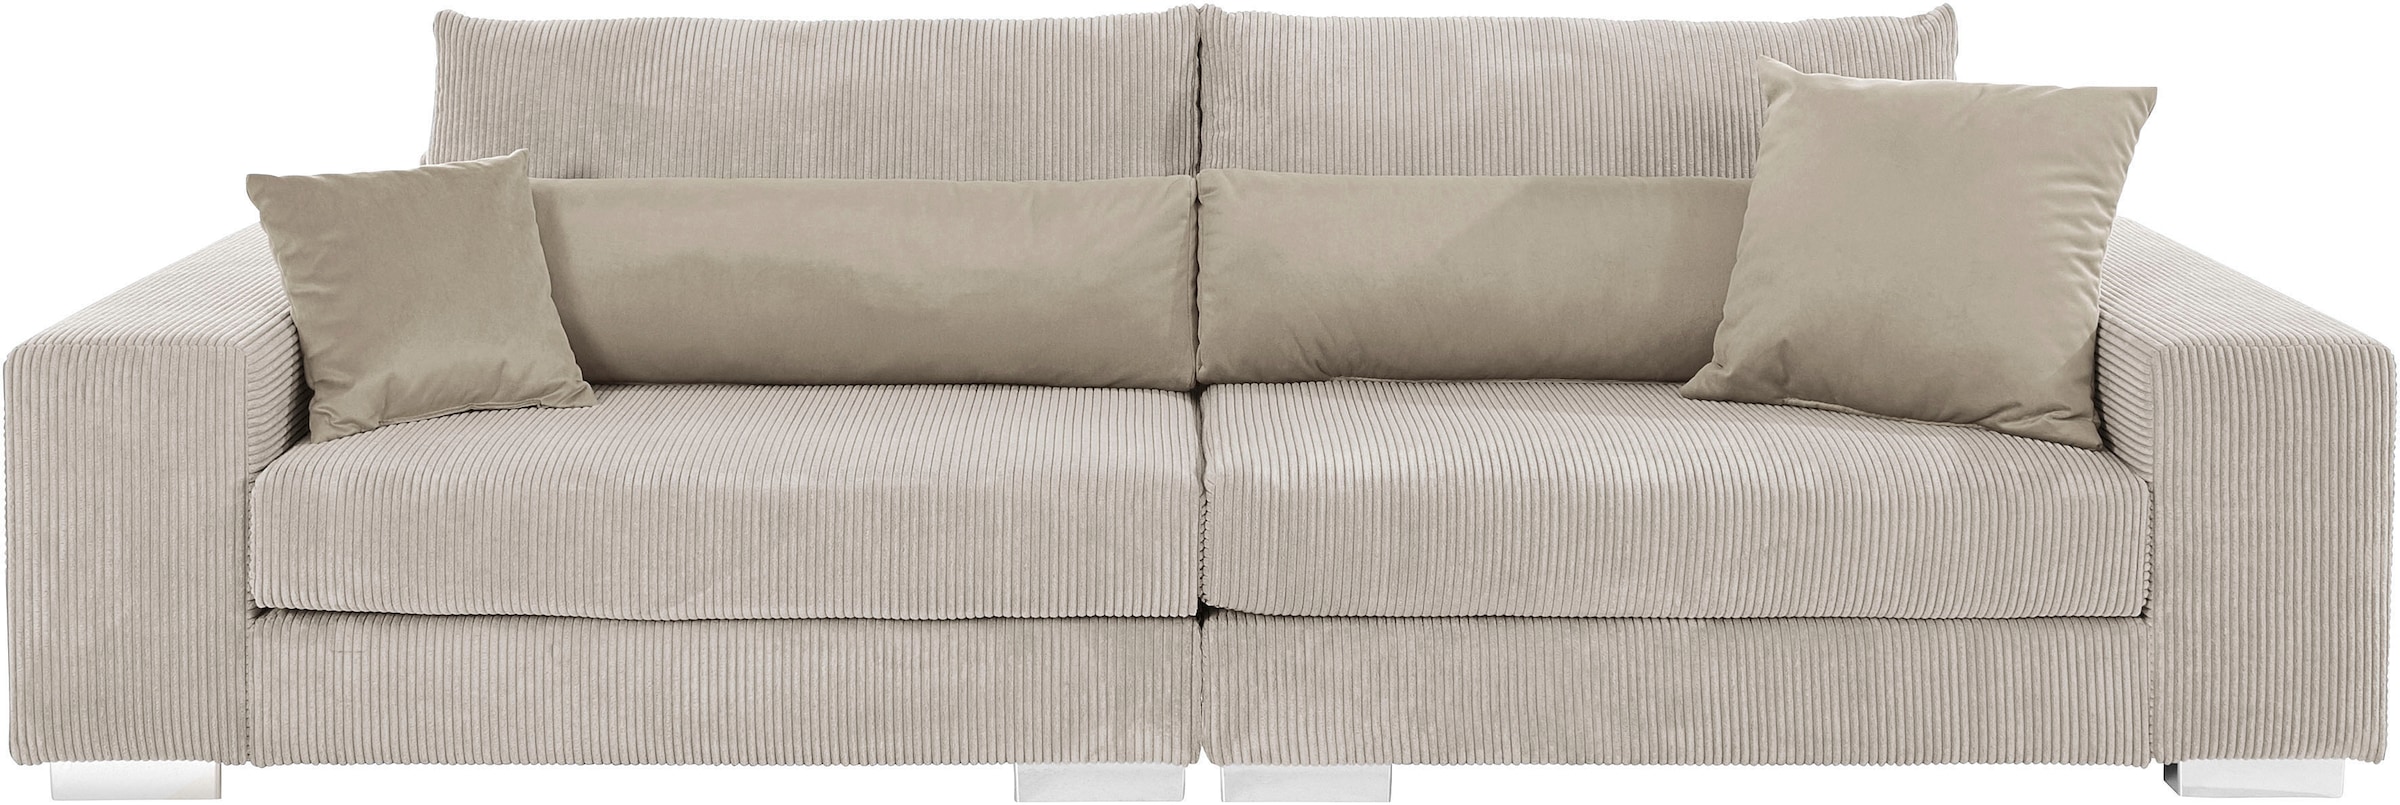 Breite Home »Vasco«, 6-teiliges Big-Sofa in bestellen 277 cm, OTTO affaire bei Cord inkl. Kissenset,